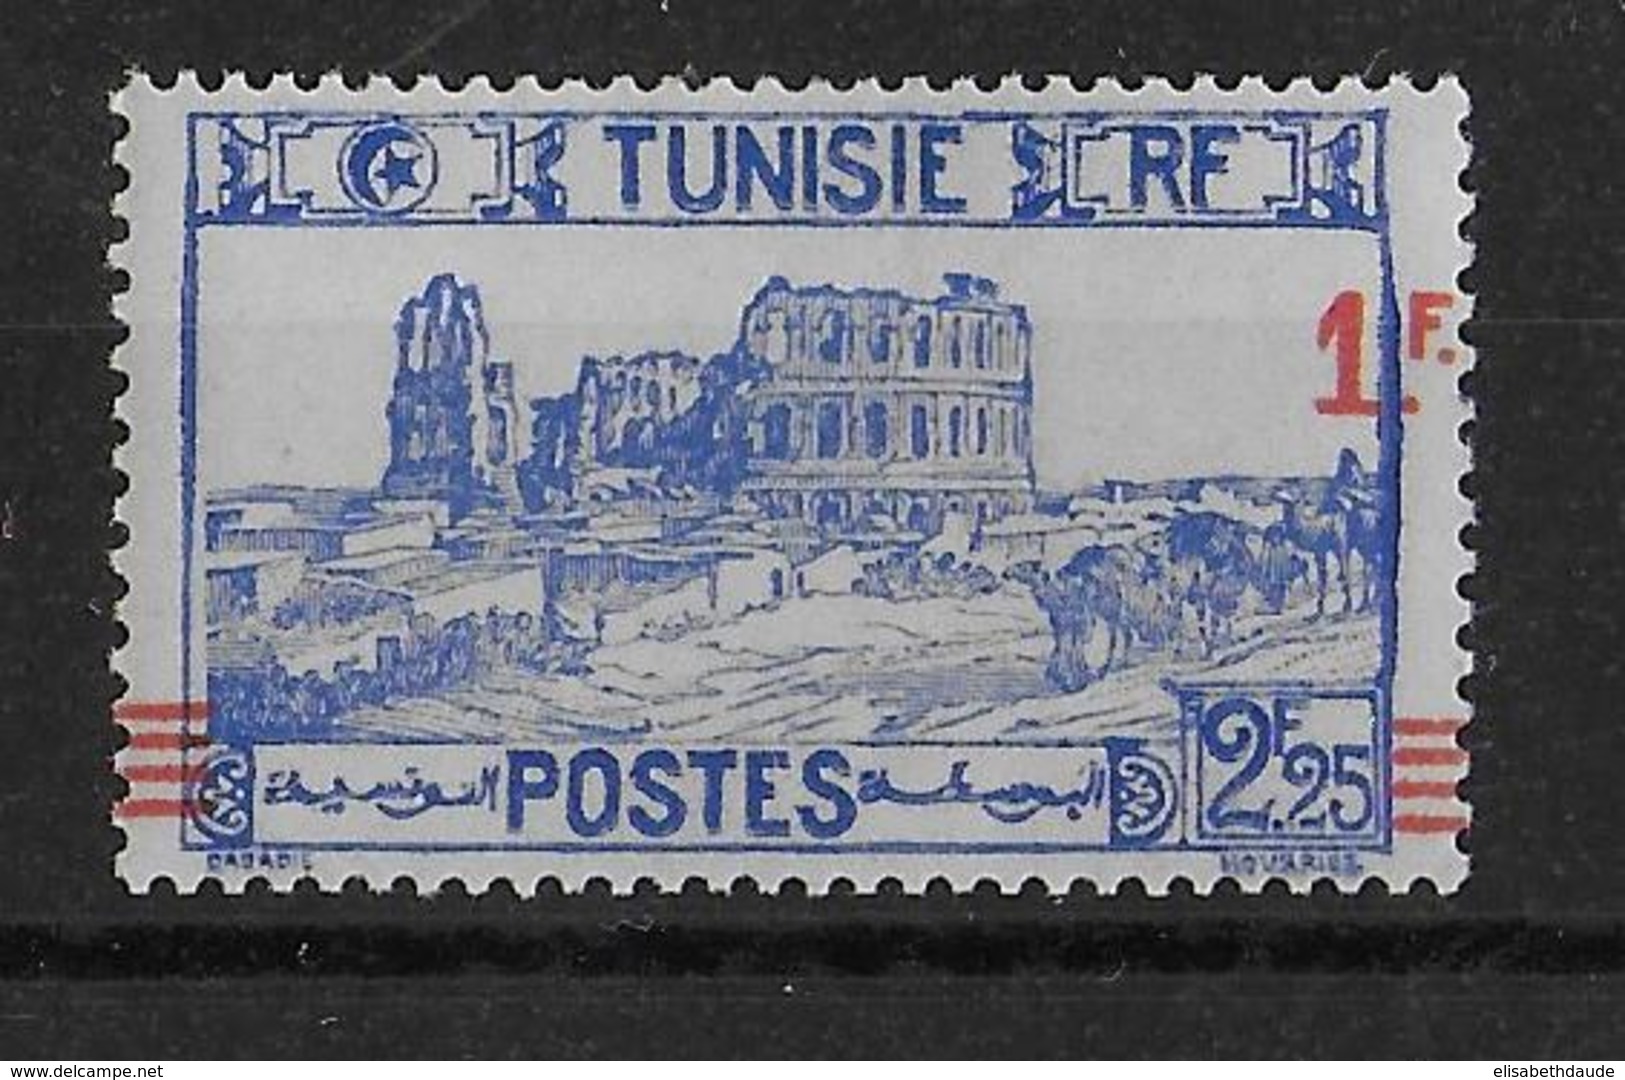 TUNISIE - 1940 - YVERT N° 226 VARIETE SURCHARGE à CHEVAL ** MNH - COTE MAURY = 55 EUR. - Nuevos